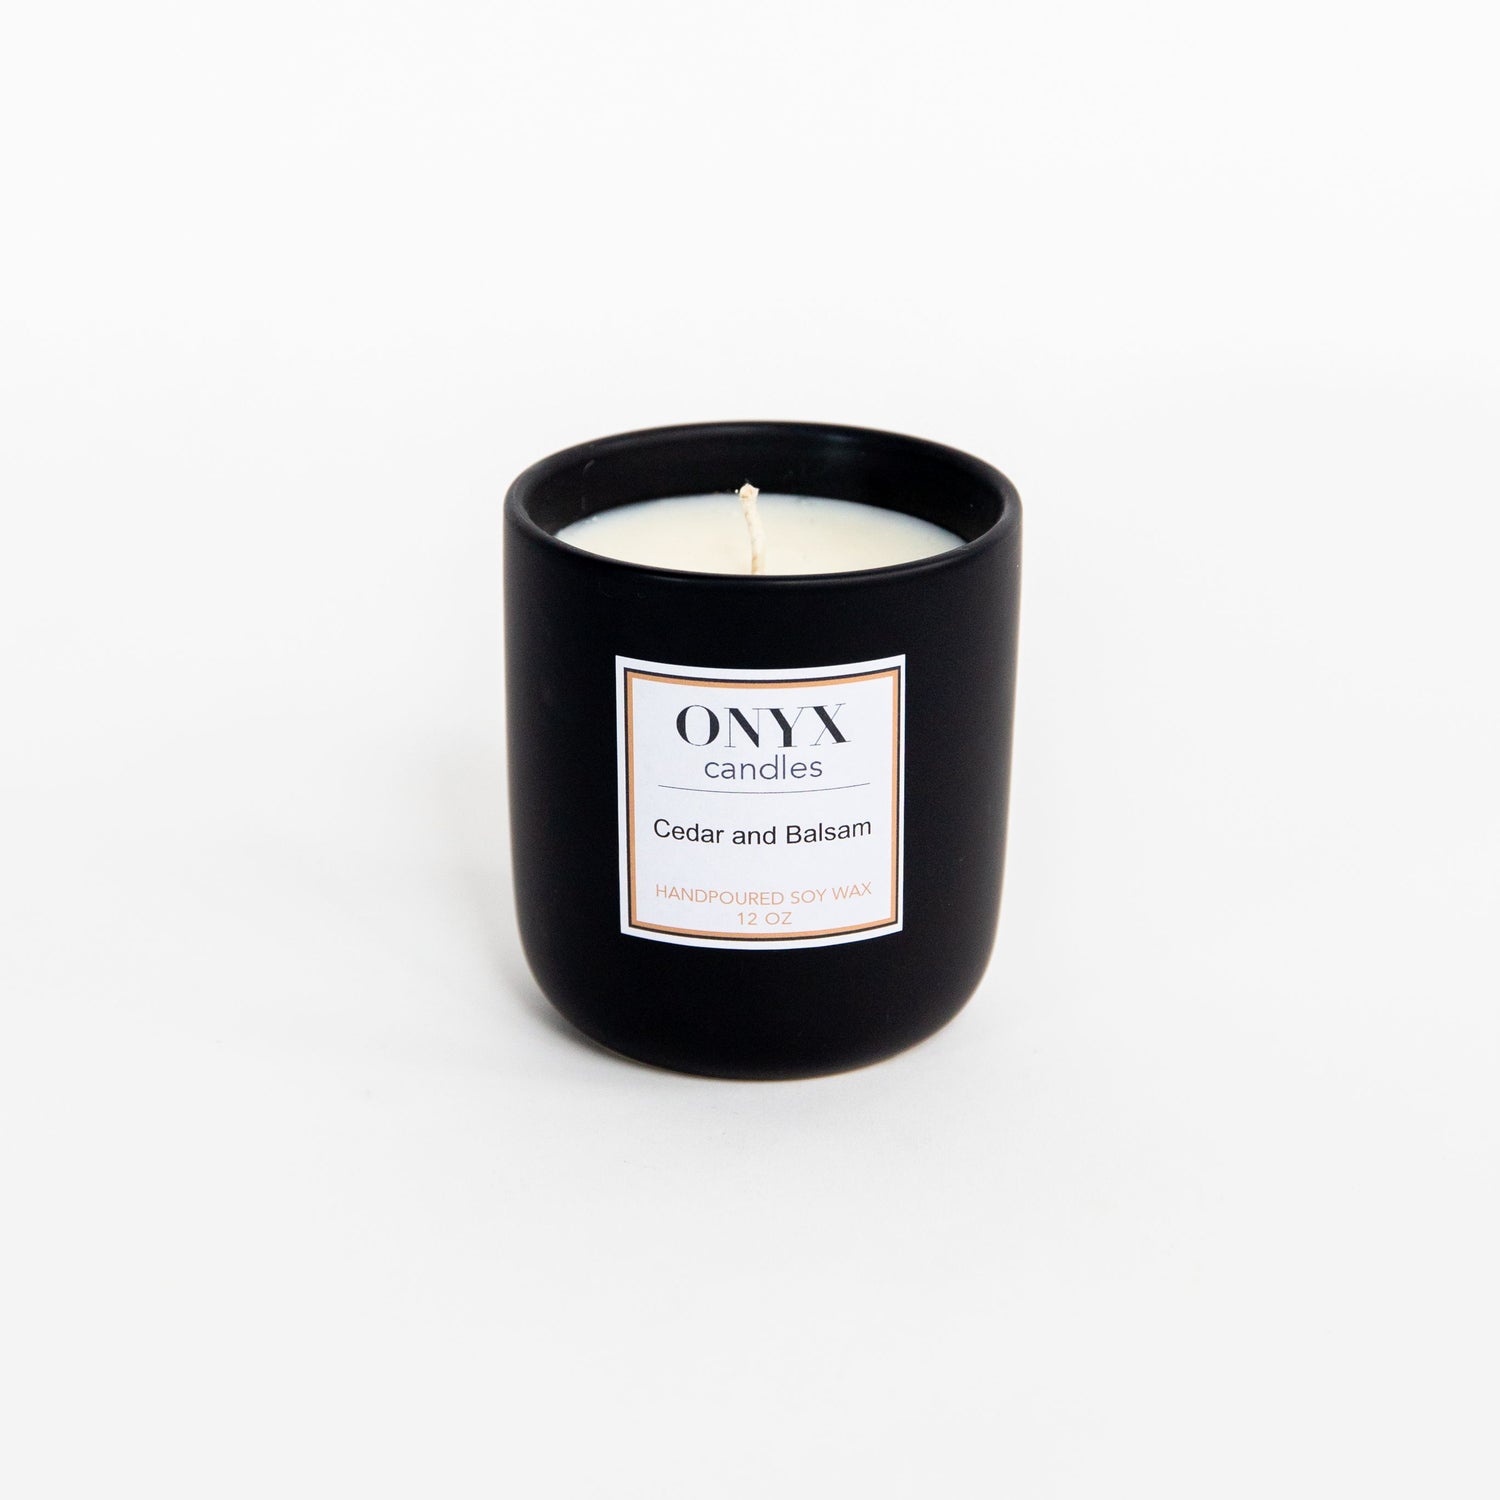 12 oz matte black ceramic candle, Cedar and Balsam scented